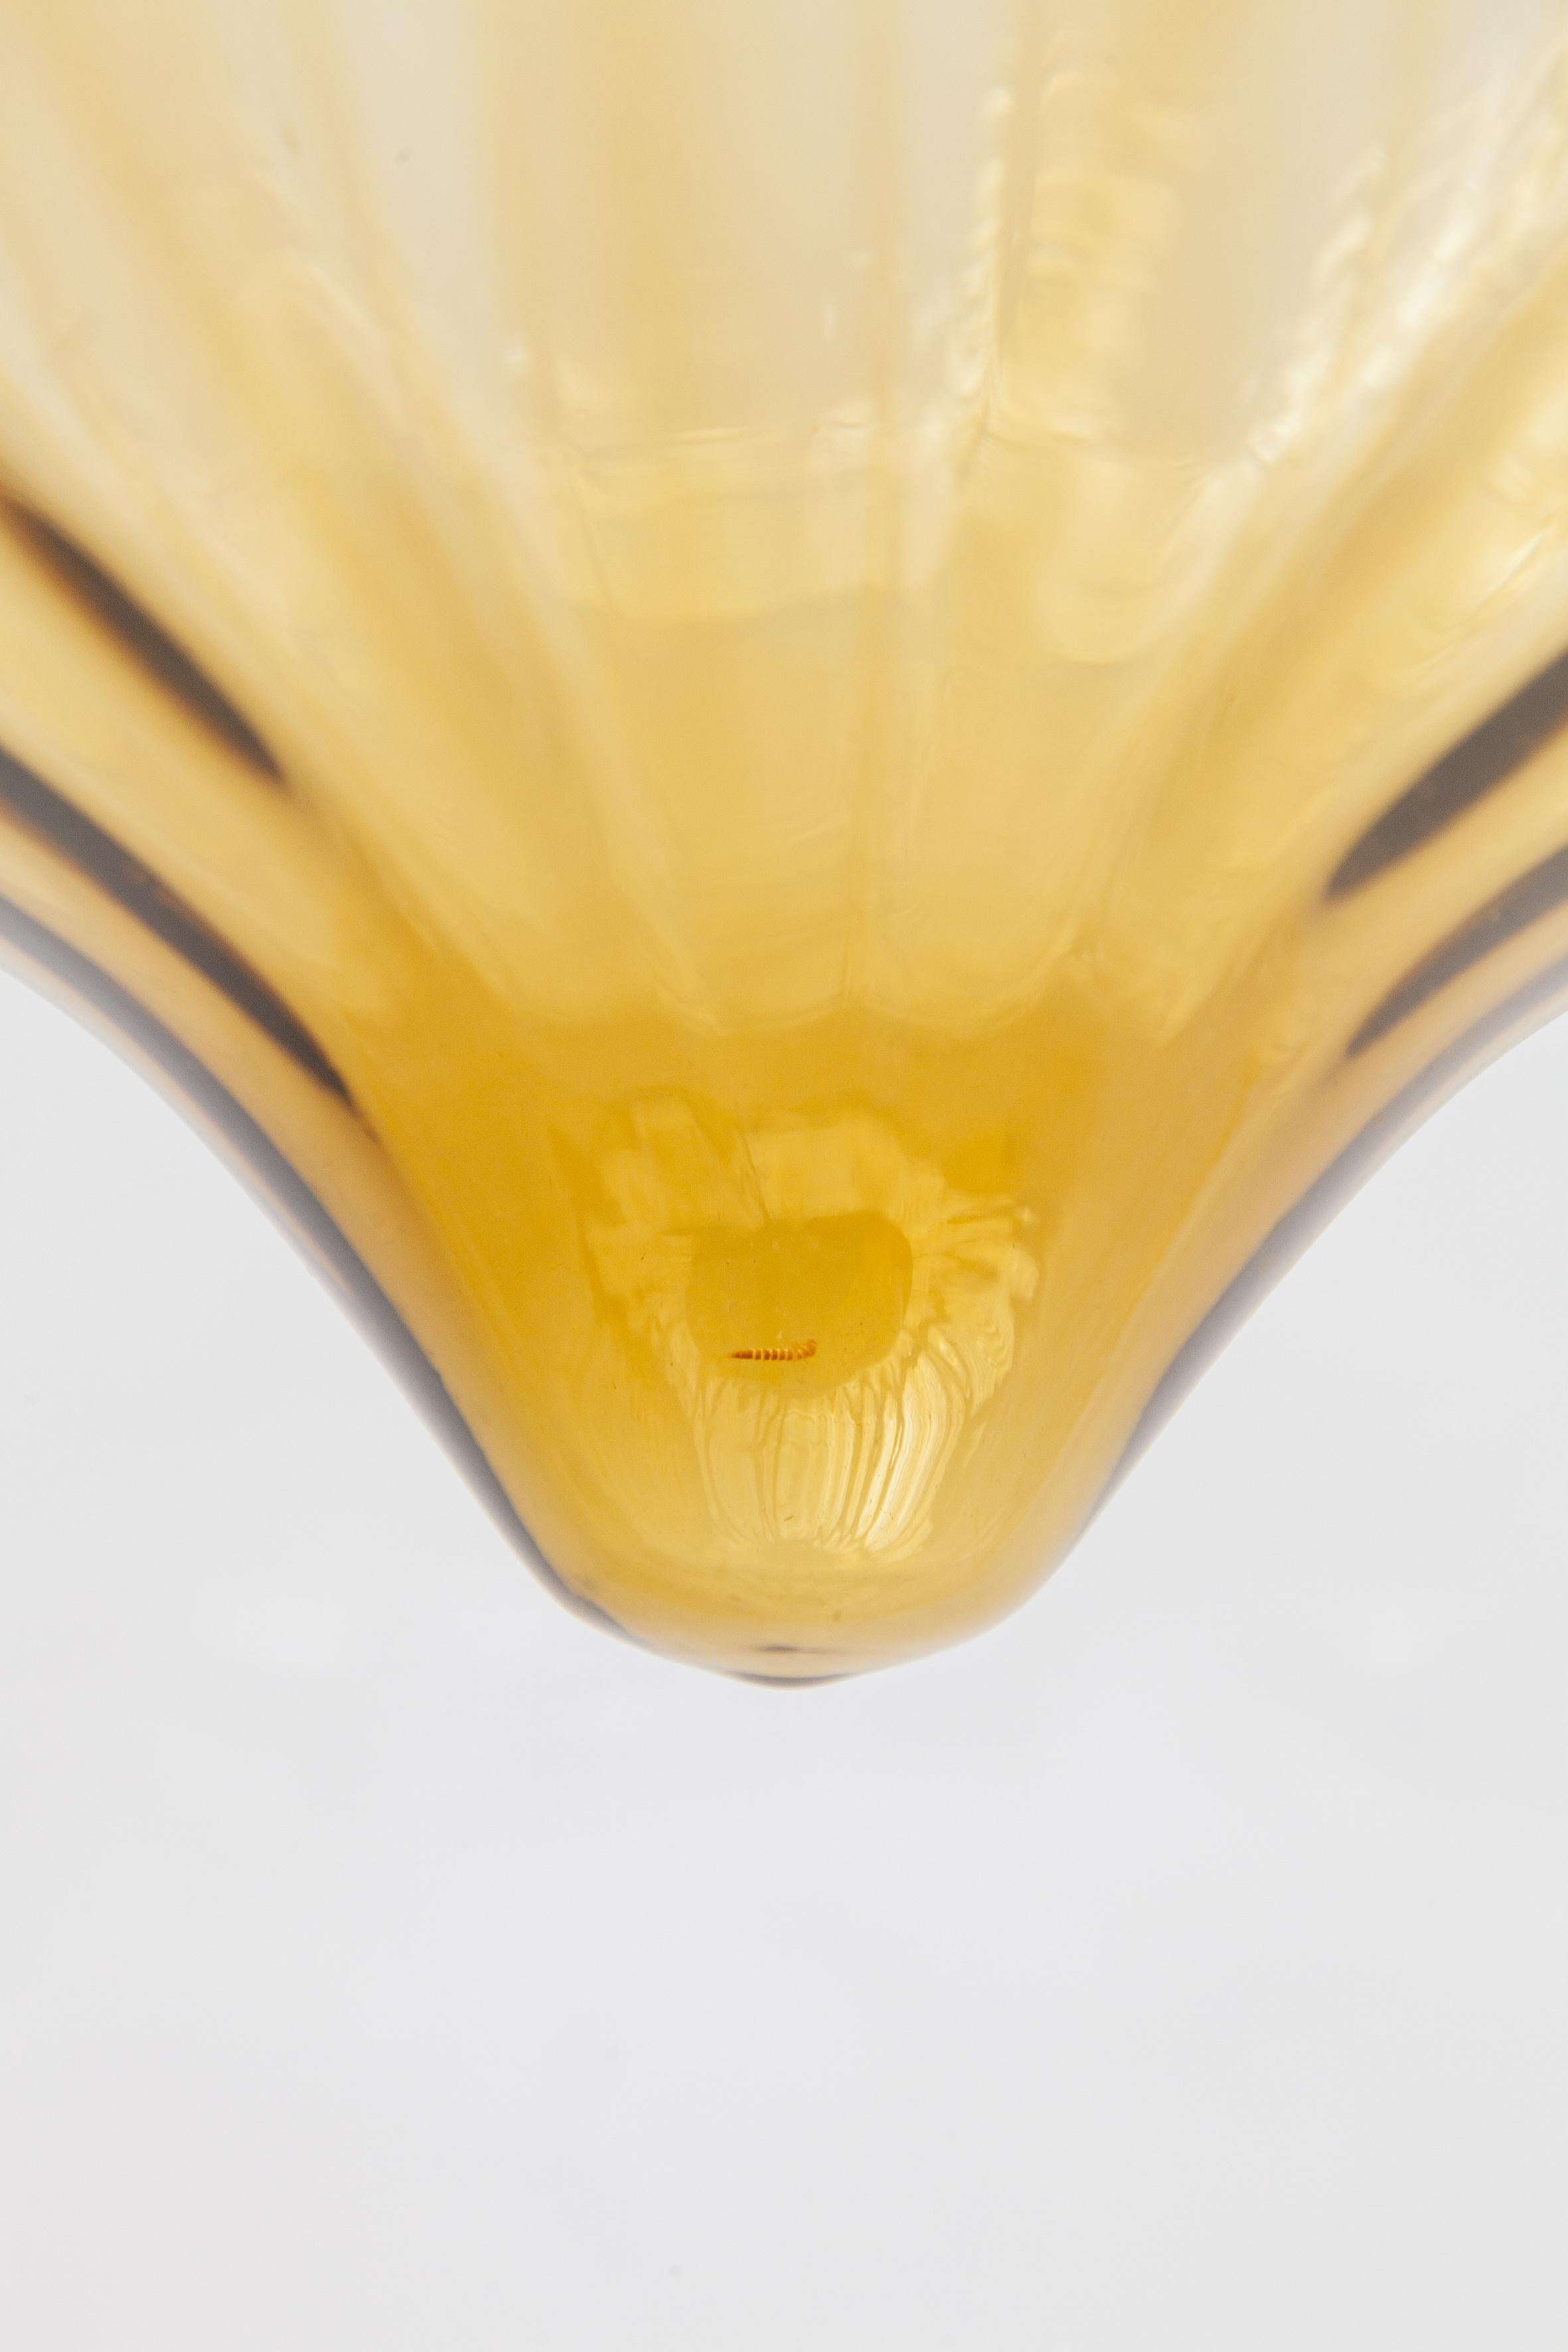 Dutch Amber Raak Glass Pendant Light Hand Blown, 1970s For Sale